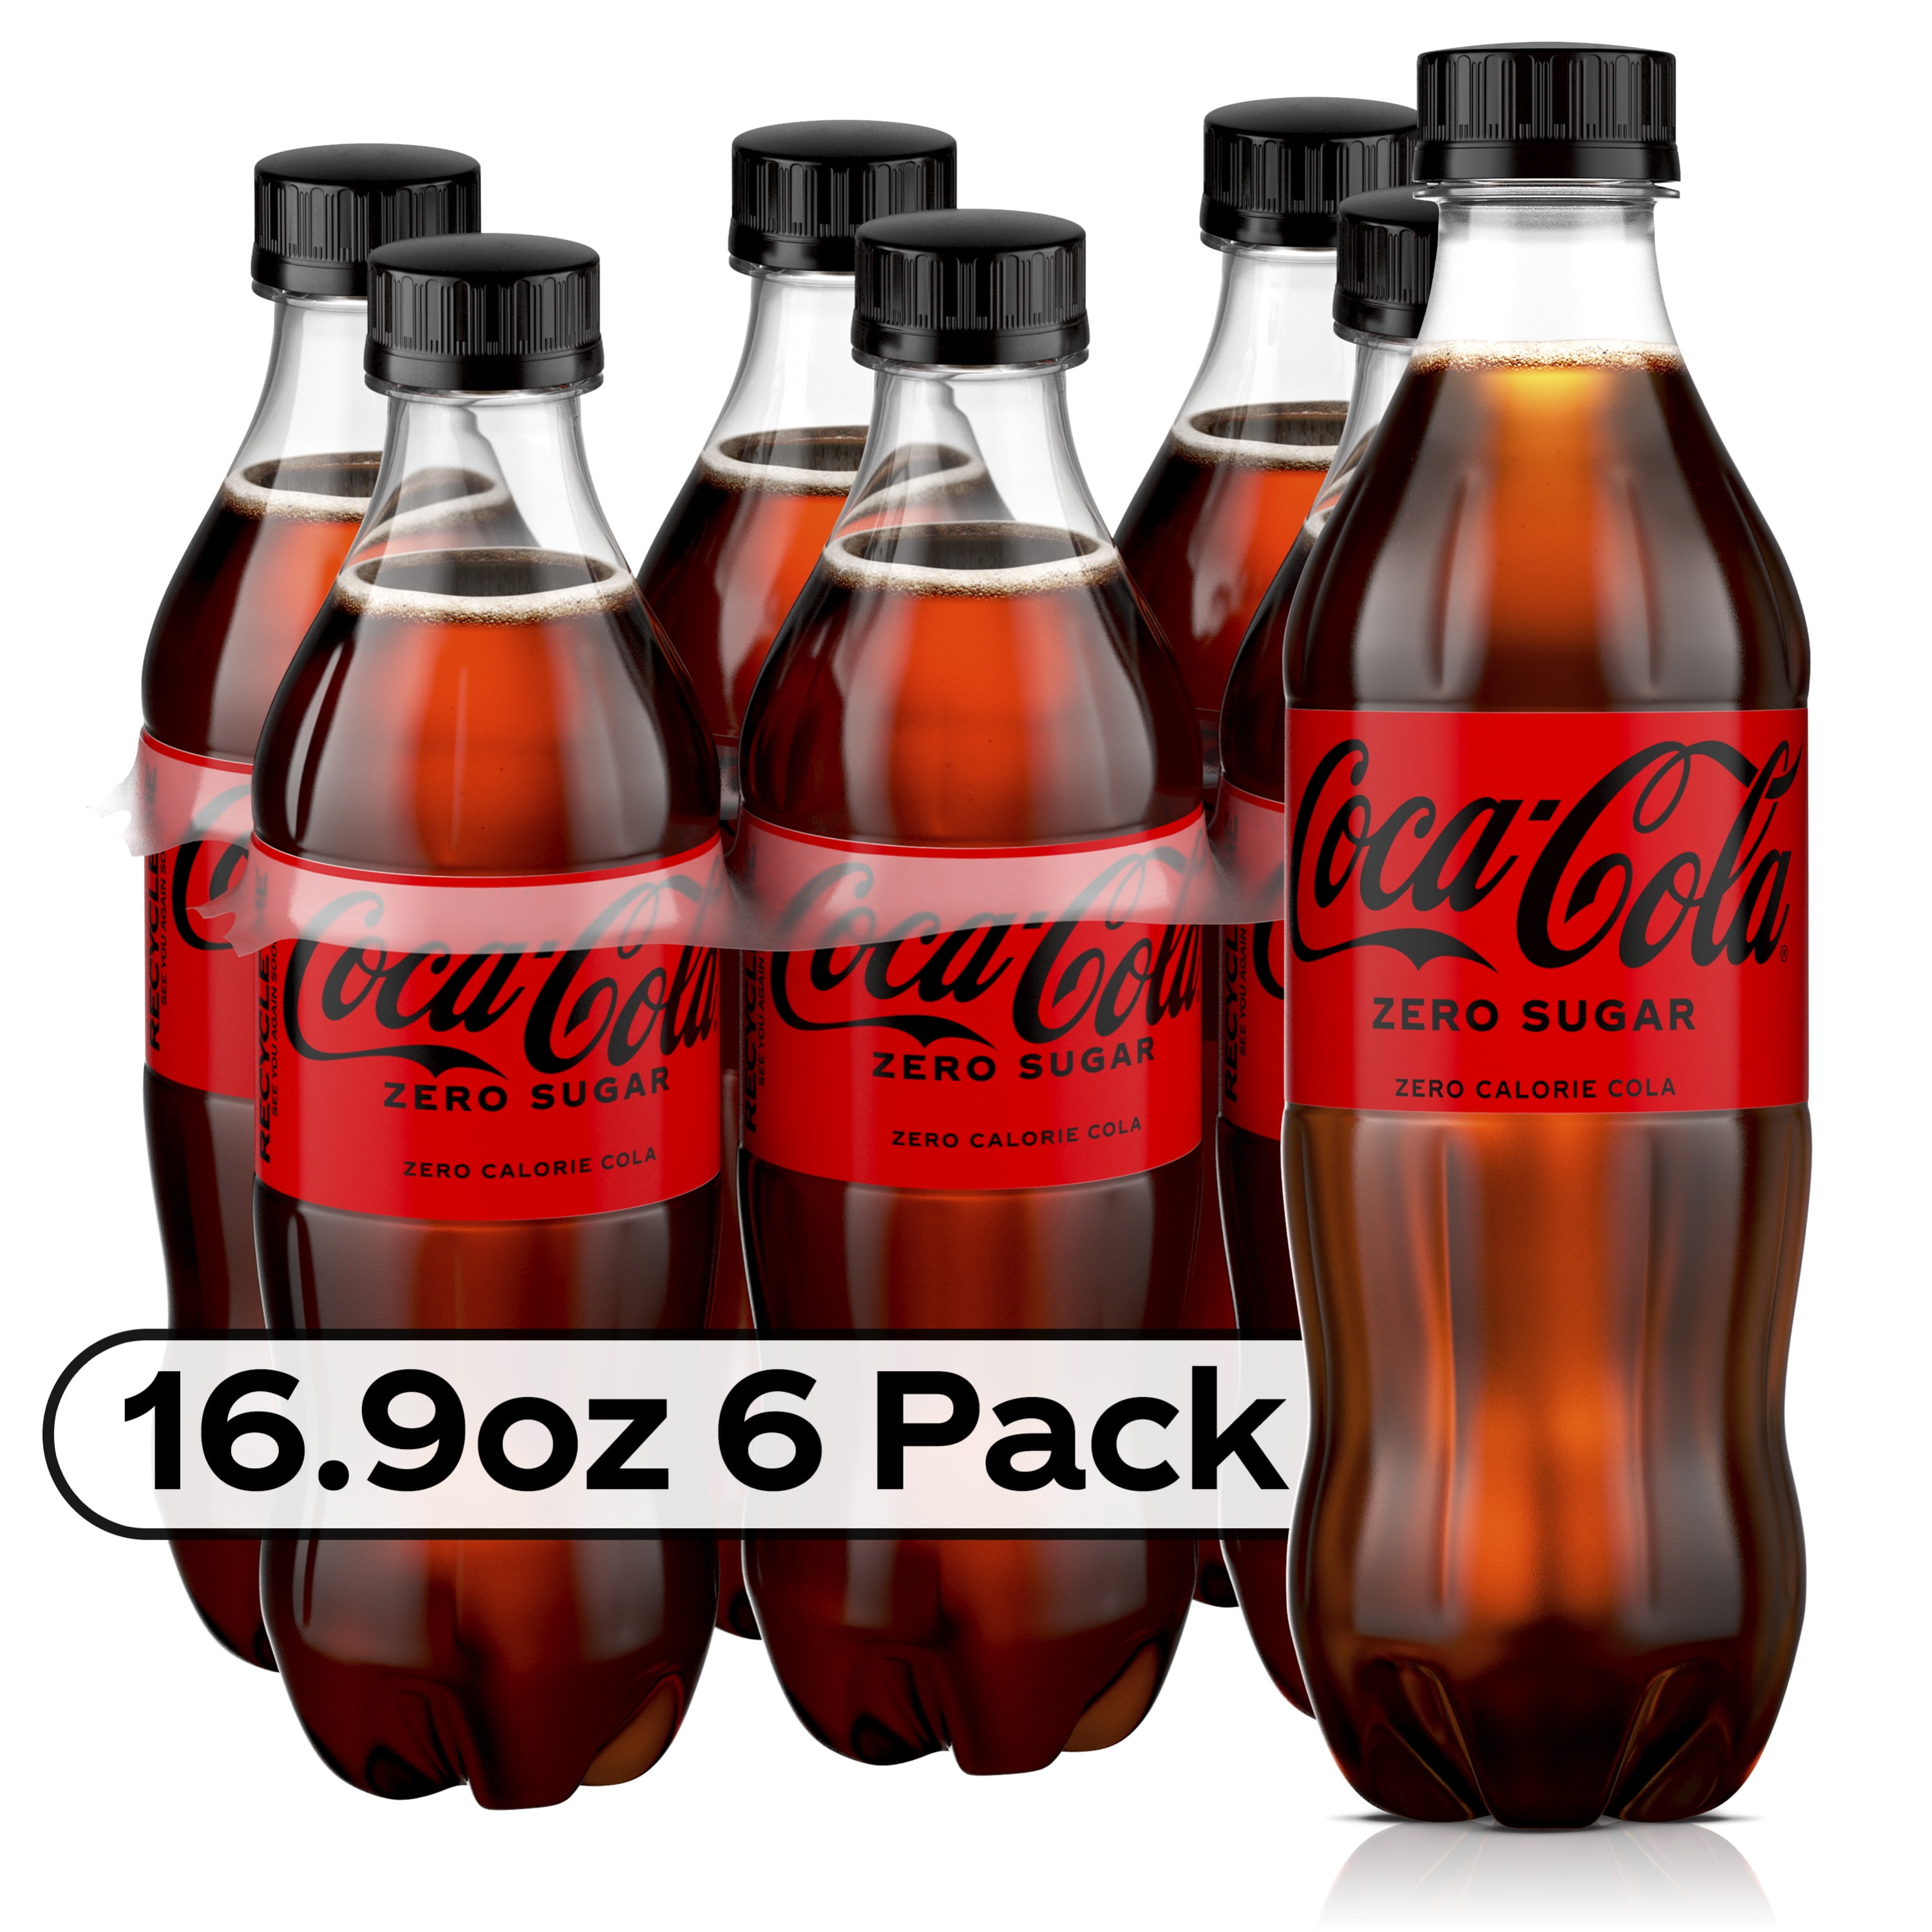 Coca-Cola Zero Sugar Soda Pop, 16.9 fl oz, 6 Pack Cans